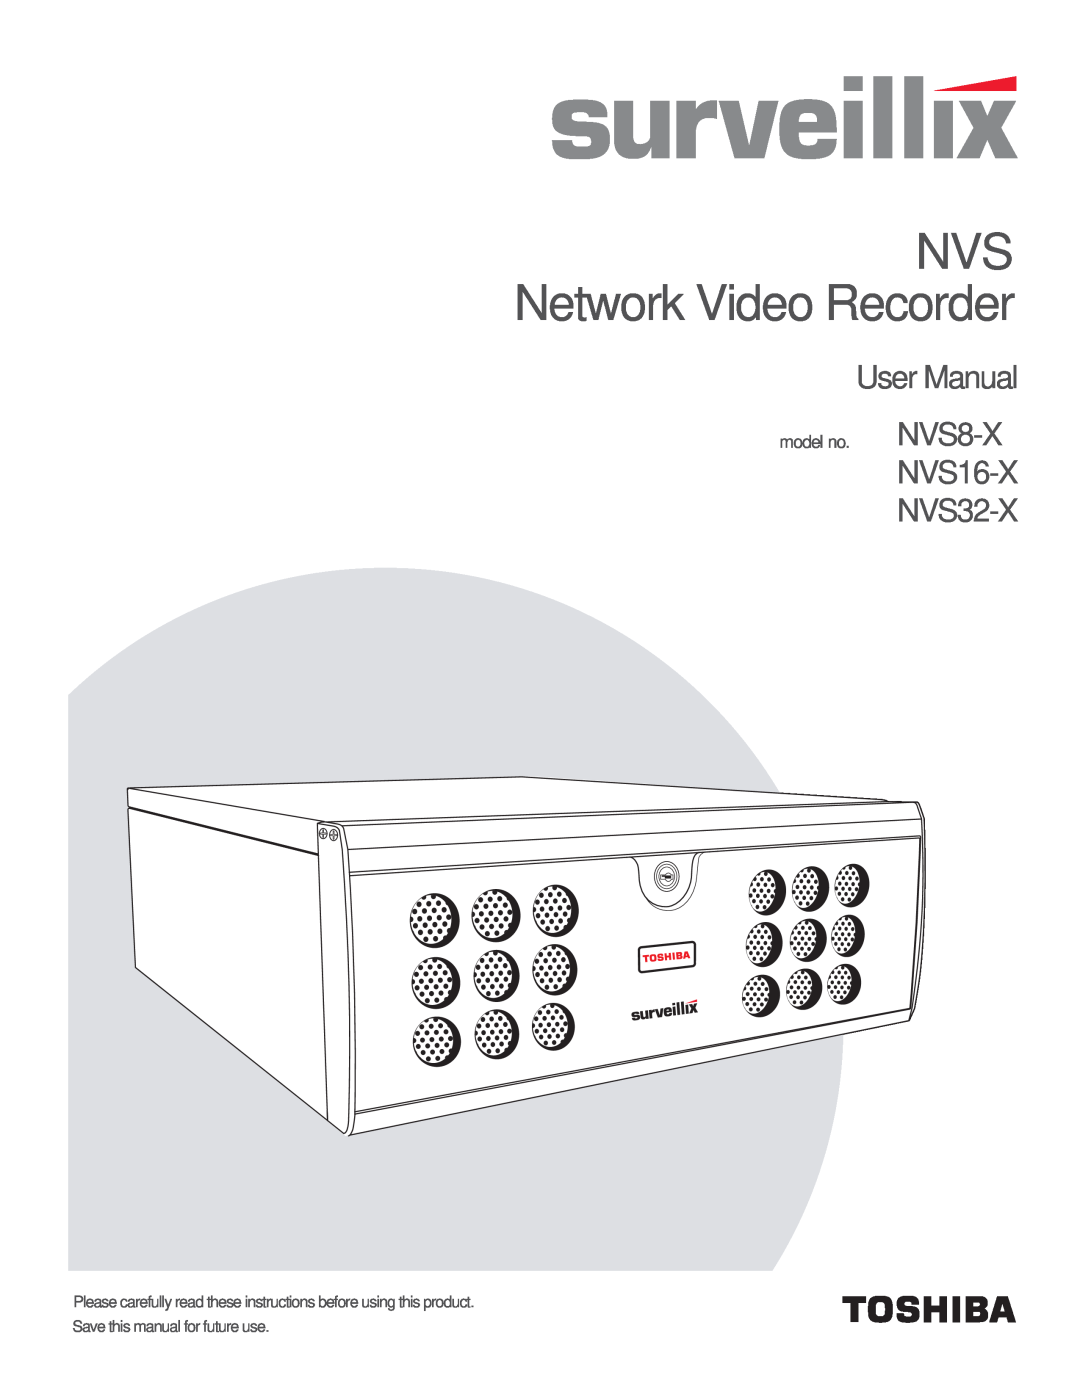 Toshiba user manual NVS Network Video Recorder, User Manual, NVS16-X NVS32-X, model no. NVS8-X 